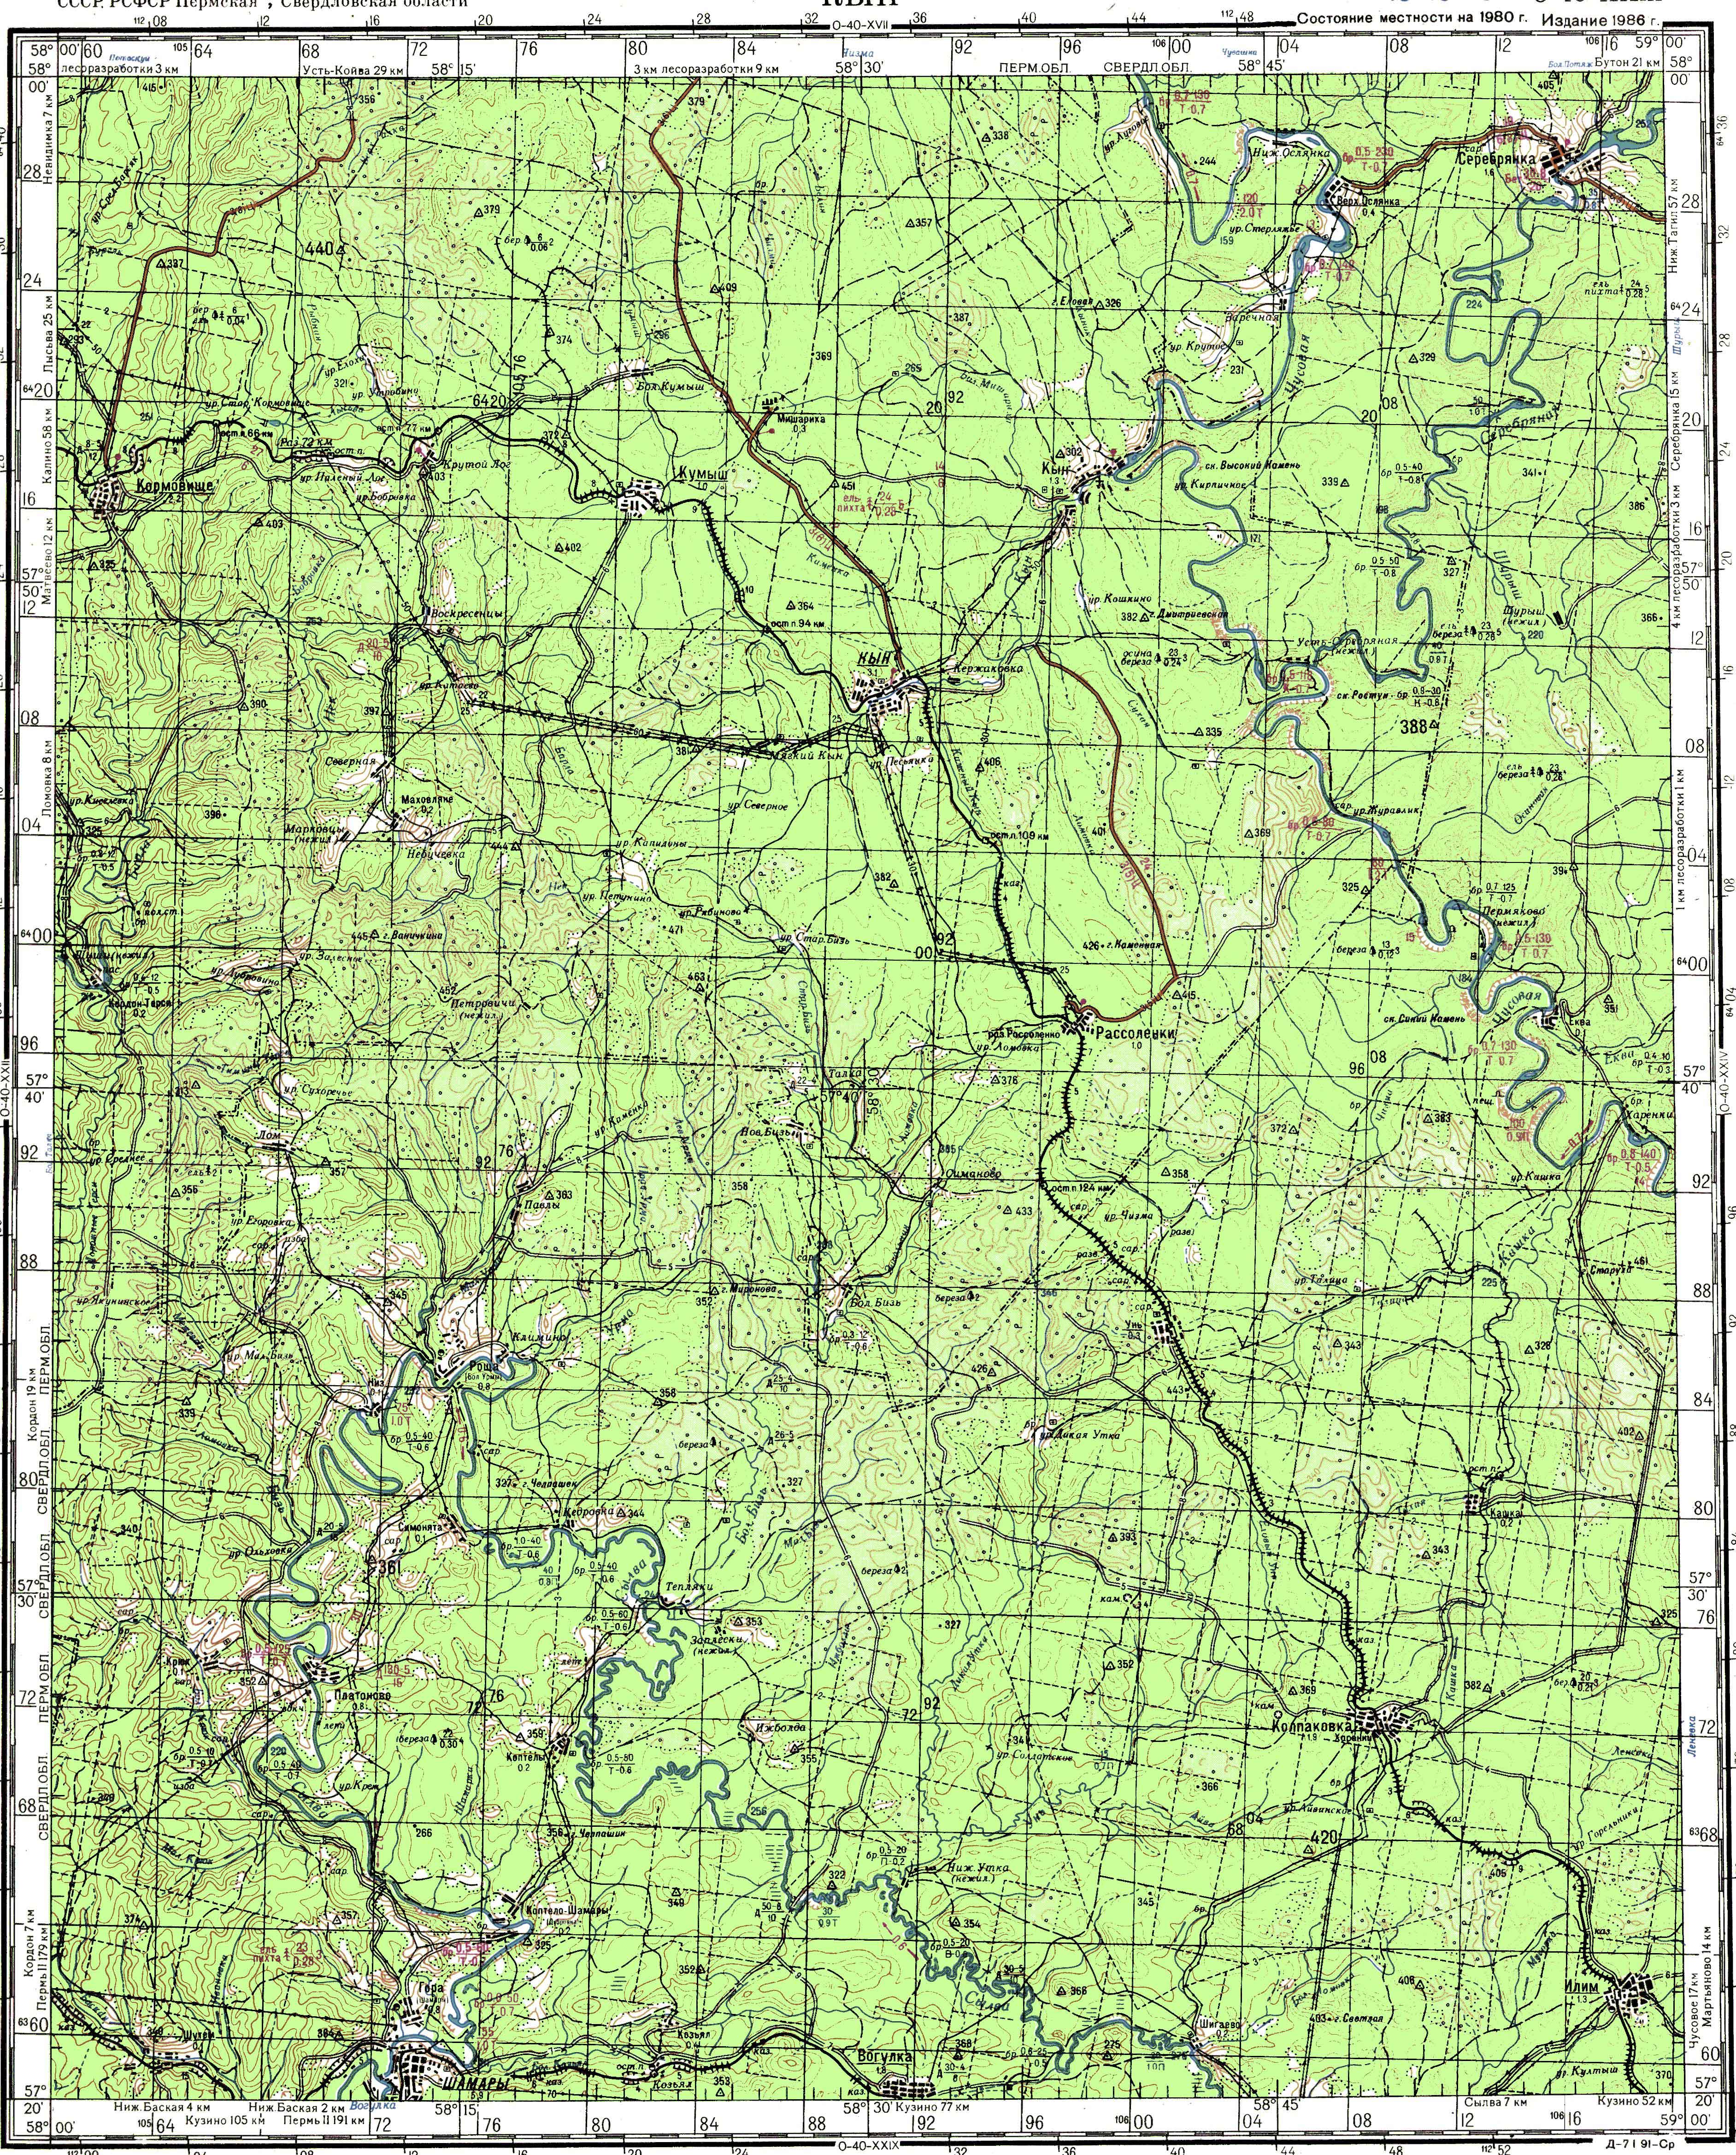 O 40 б. Кын на карте. Кын Пермский край на карте. Кын на карте Свердловской области. Карта Гайнского района.